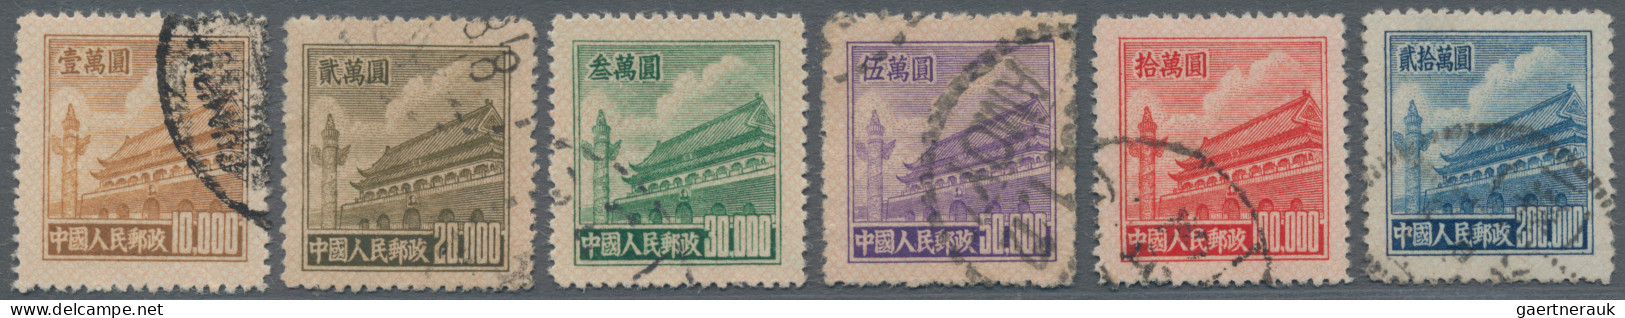 China (PRC): 1951, Tien An Men 5th Issue Set (R5), Used, $200.000 Slight Corner - Gebraucht